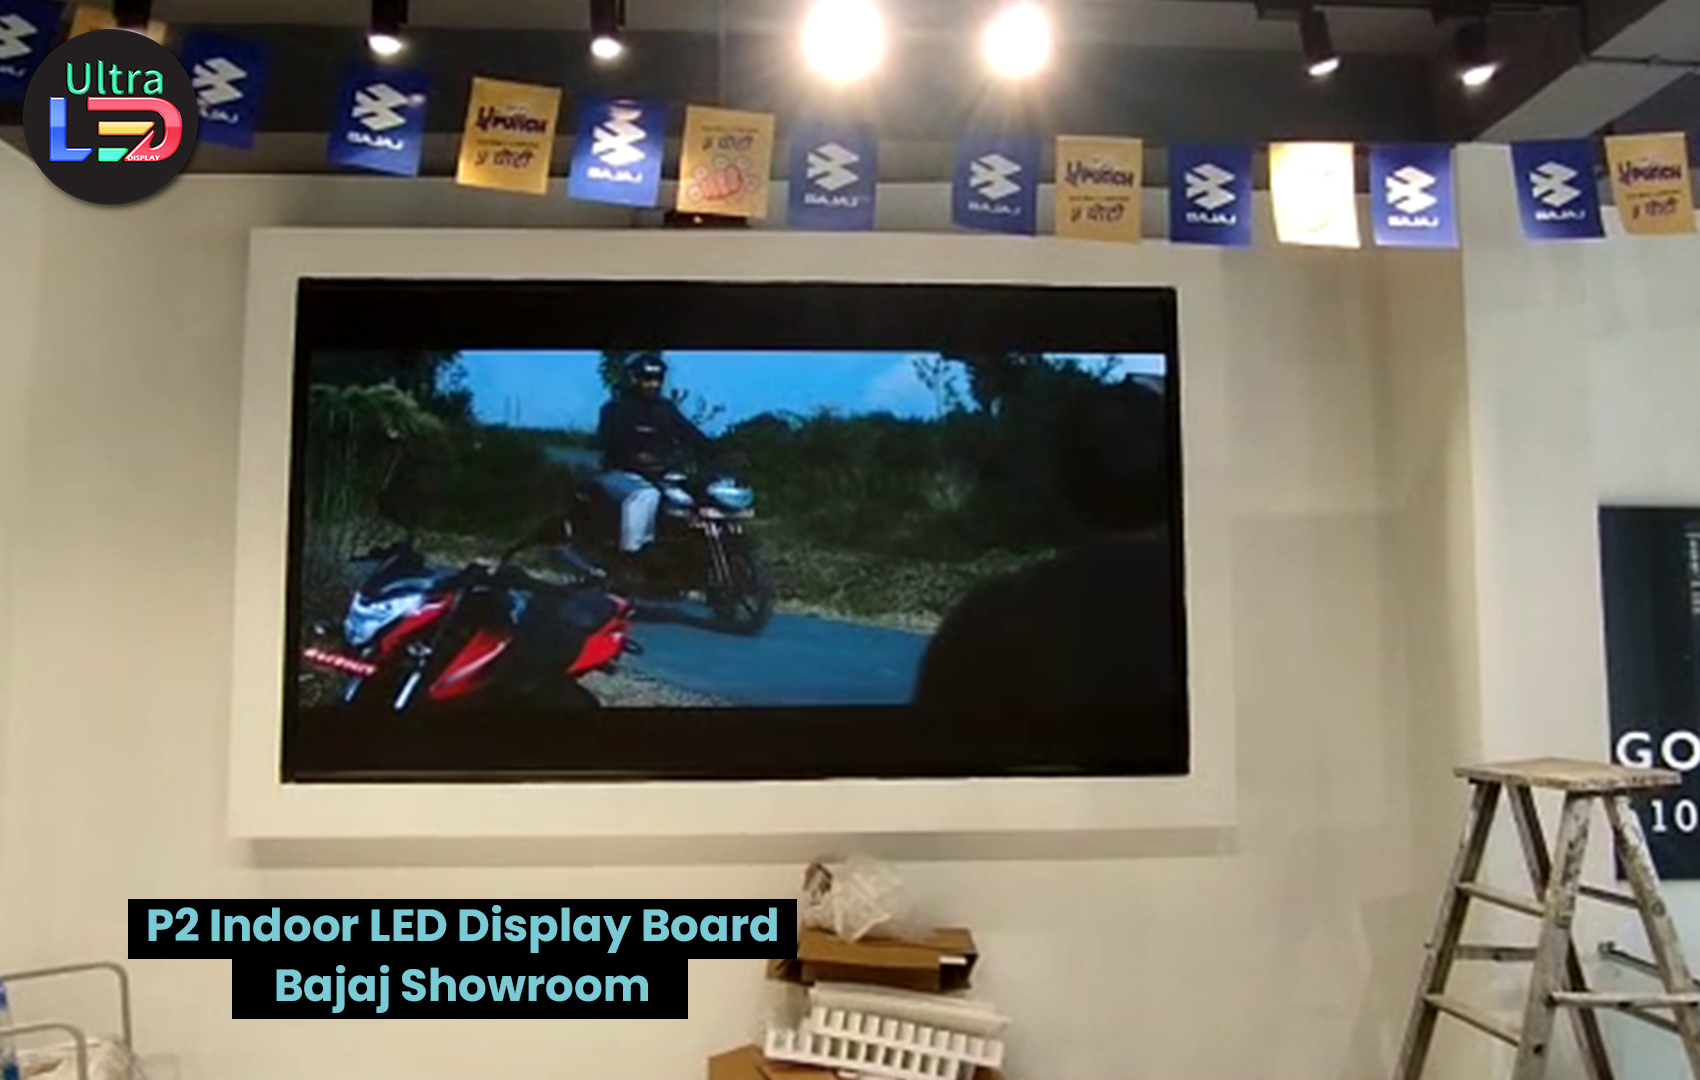 Ultra Led Display Board at Bajaj Showroom